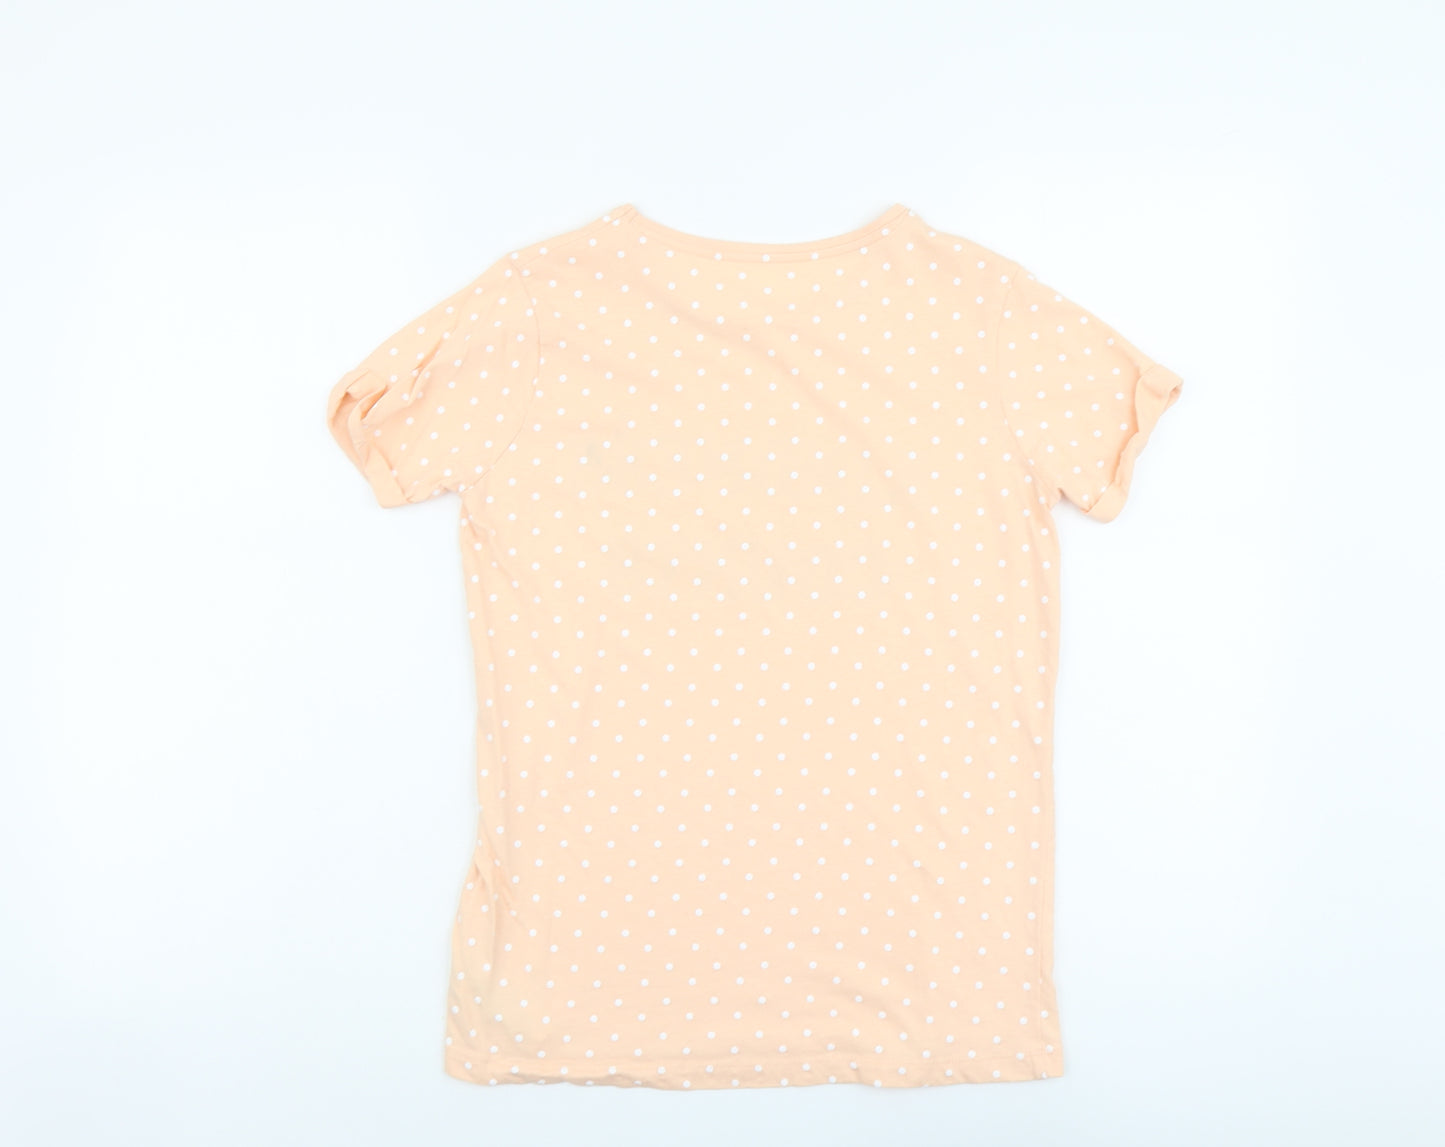 Primark Girls Orange Polka Dot Cotton Basic T-Shirt Size 13-14 Years Round Neck Pullover - Kindness Counts